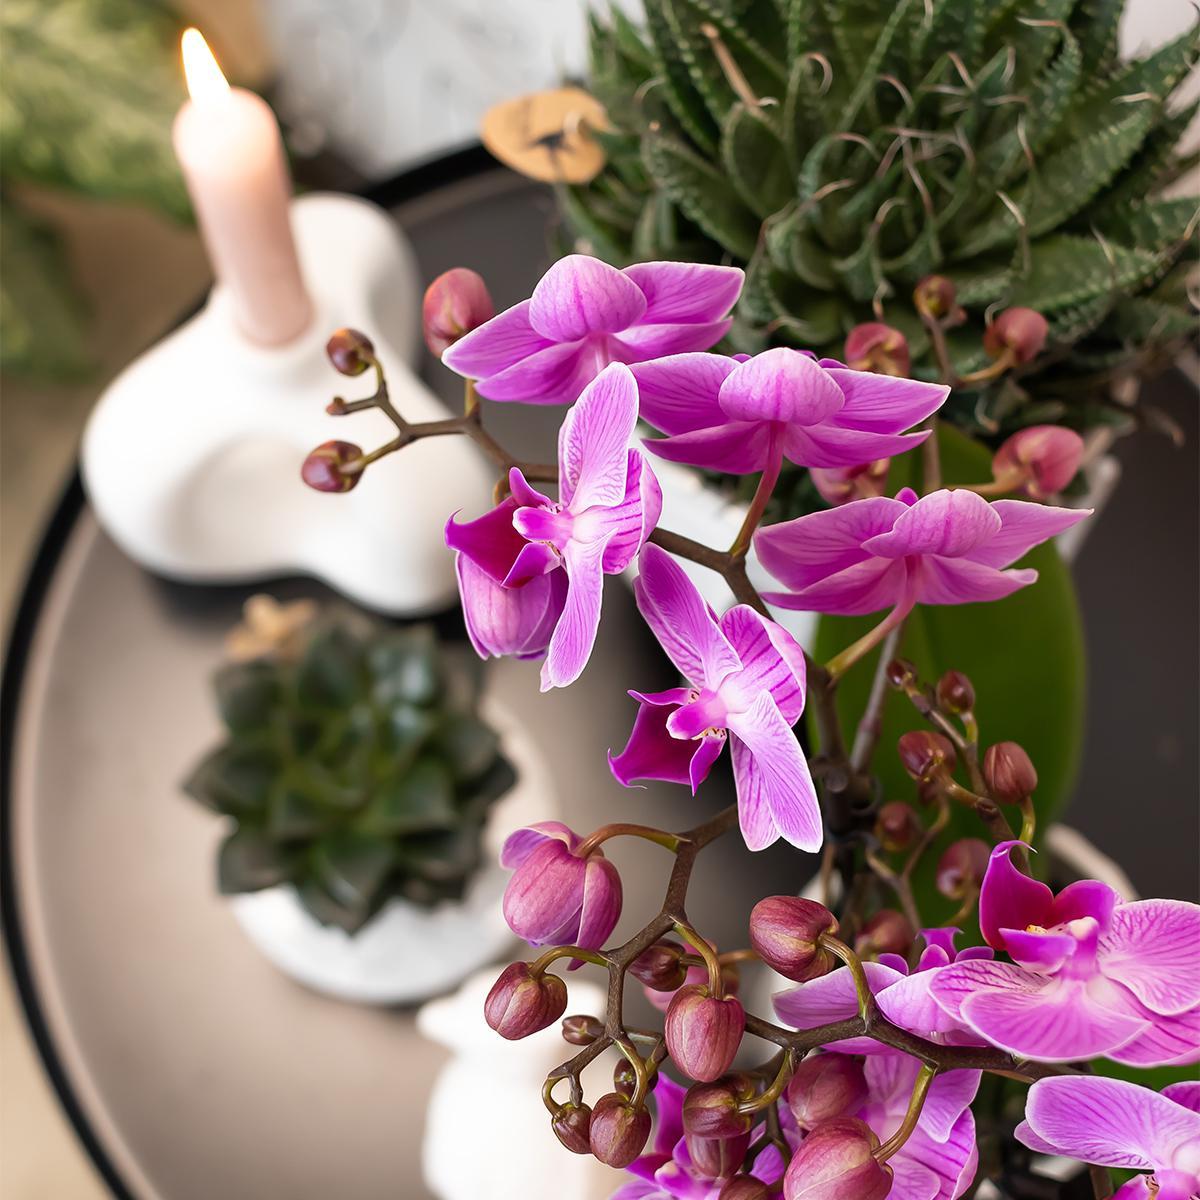  Lila/rosa Phalaenopsis-Orchidee bestellen